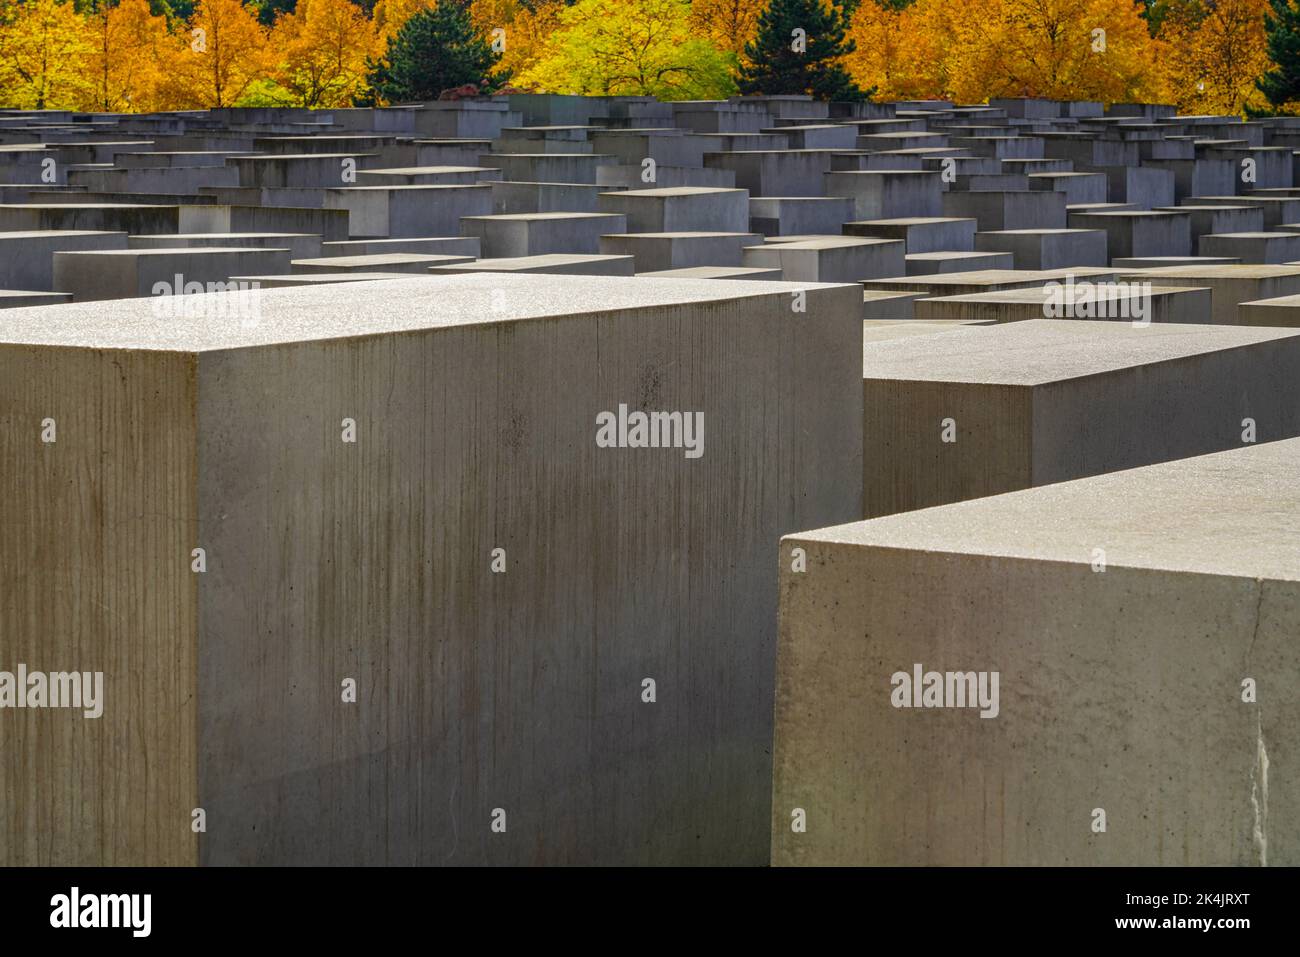 Das Denkmal für die ermordeten Juden Europas - Holocaust-Mahnmal in Berlin Stockfoto